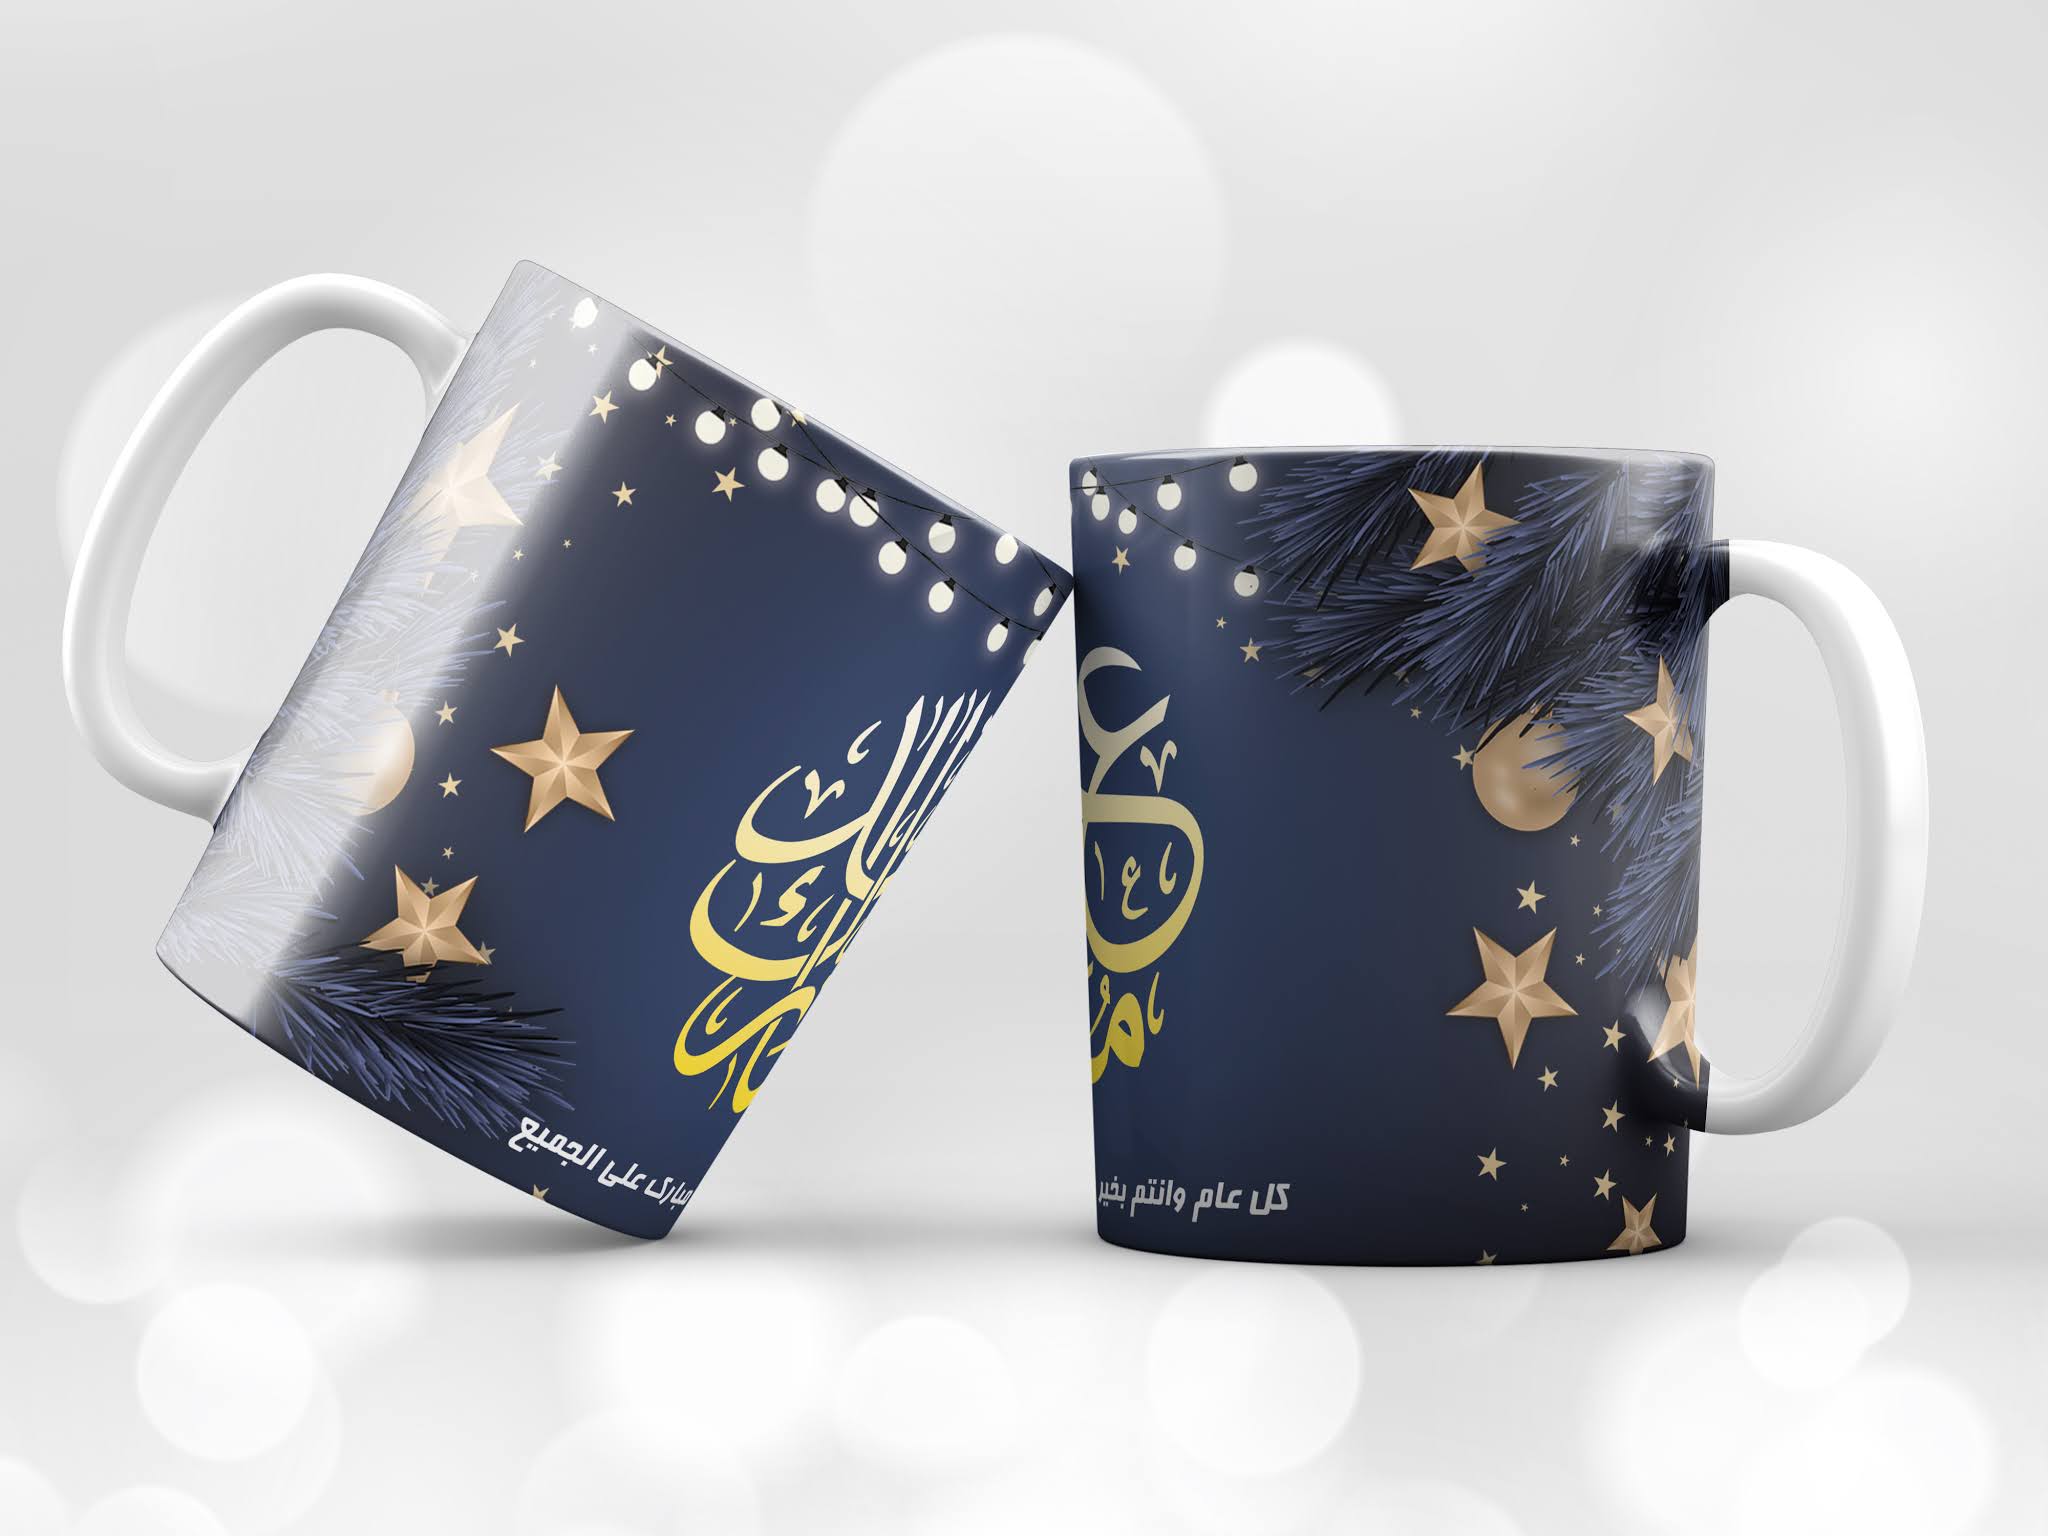 Download printing designs on mugs and mugs, group No. 1, free download